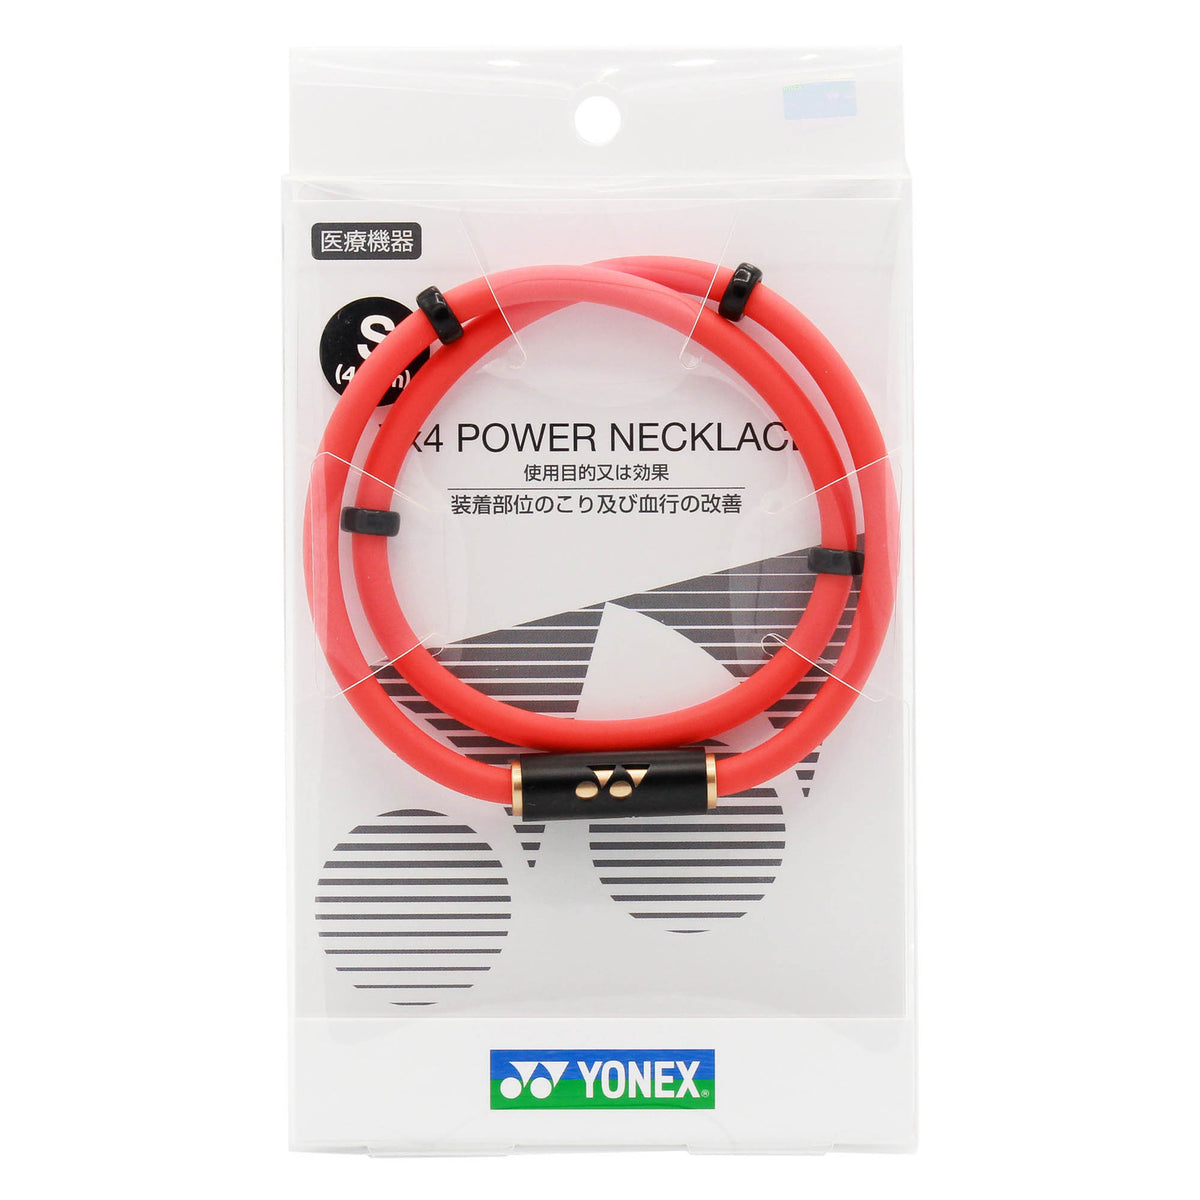 yonex Vx4 POWER NECKLACE オレンジ L-